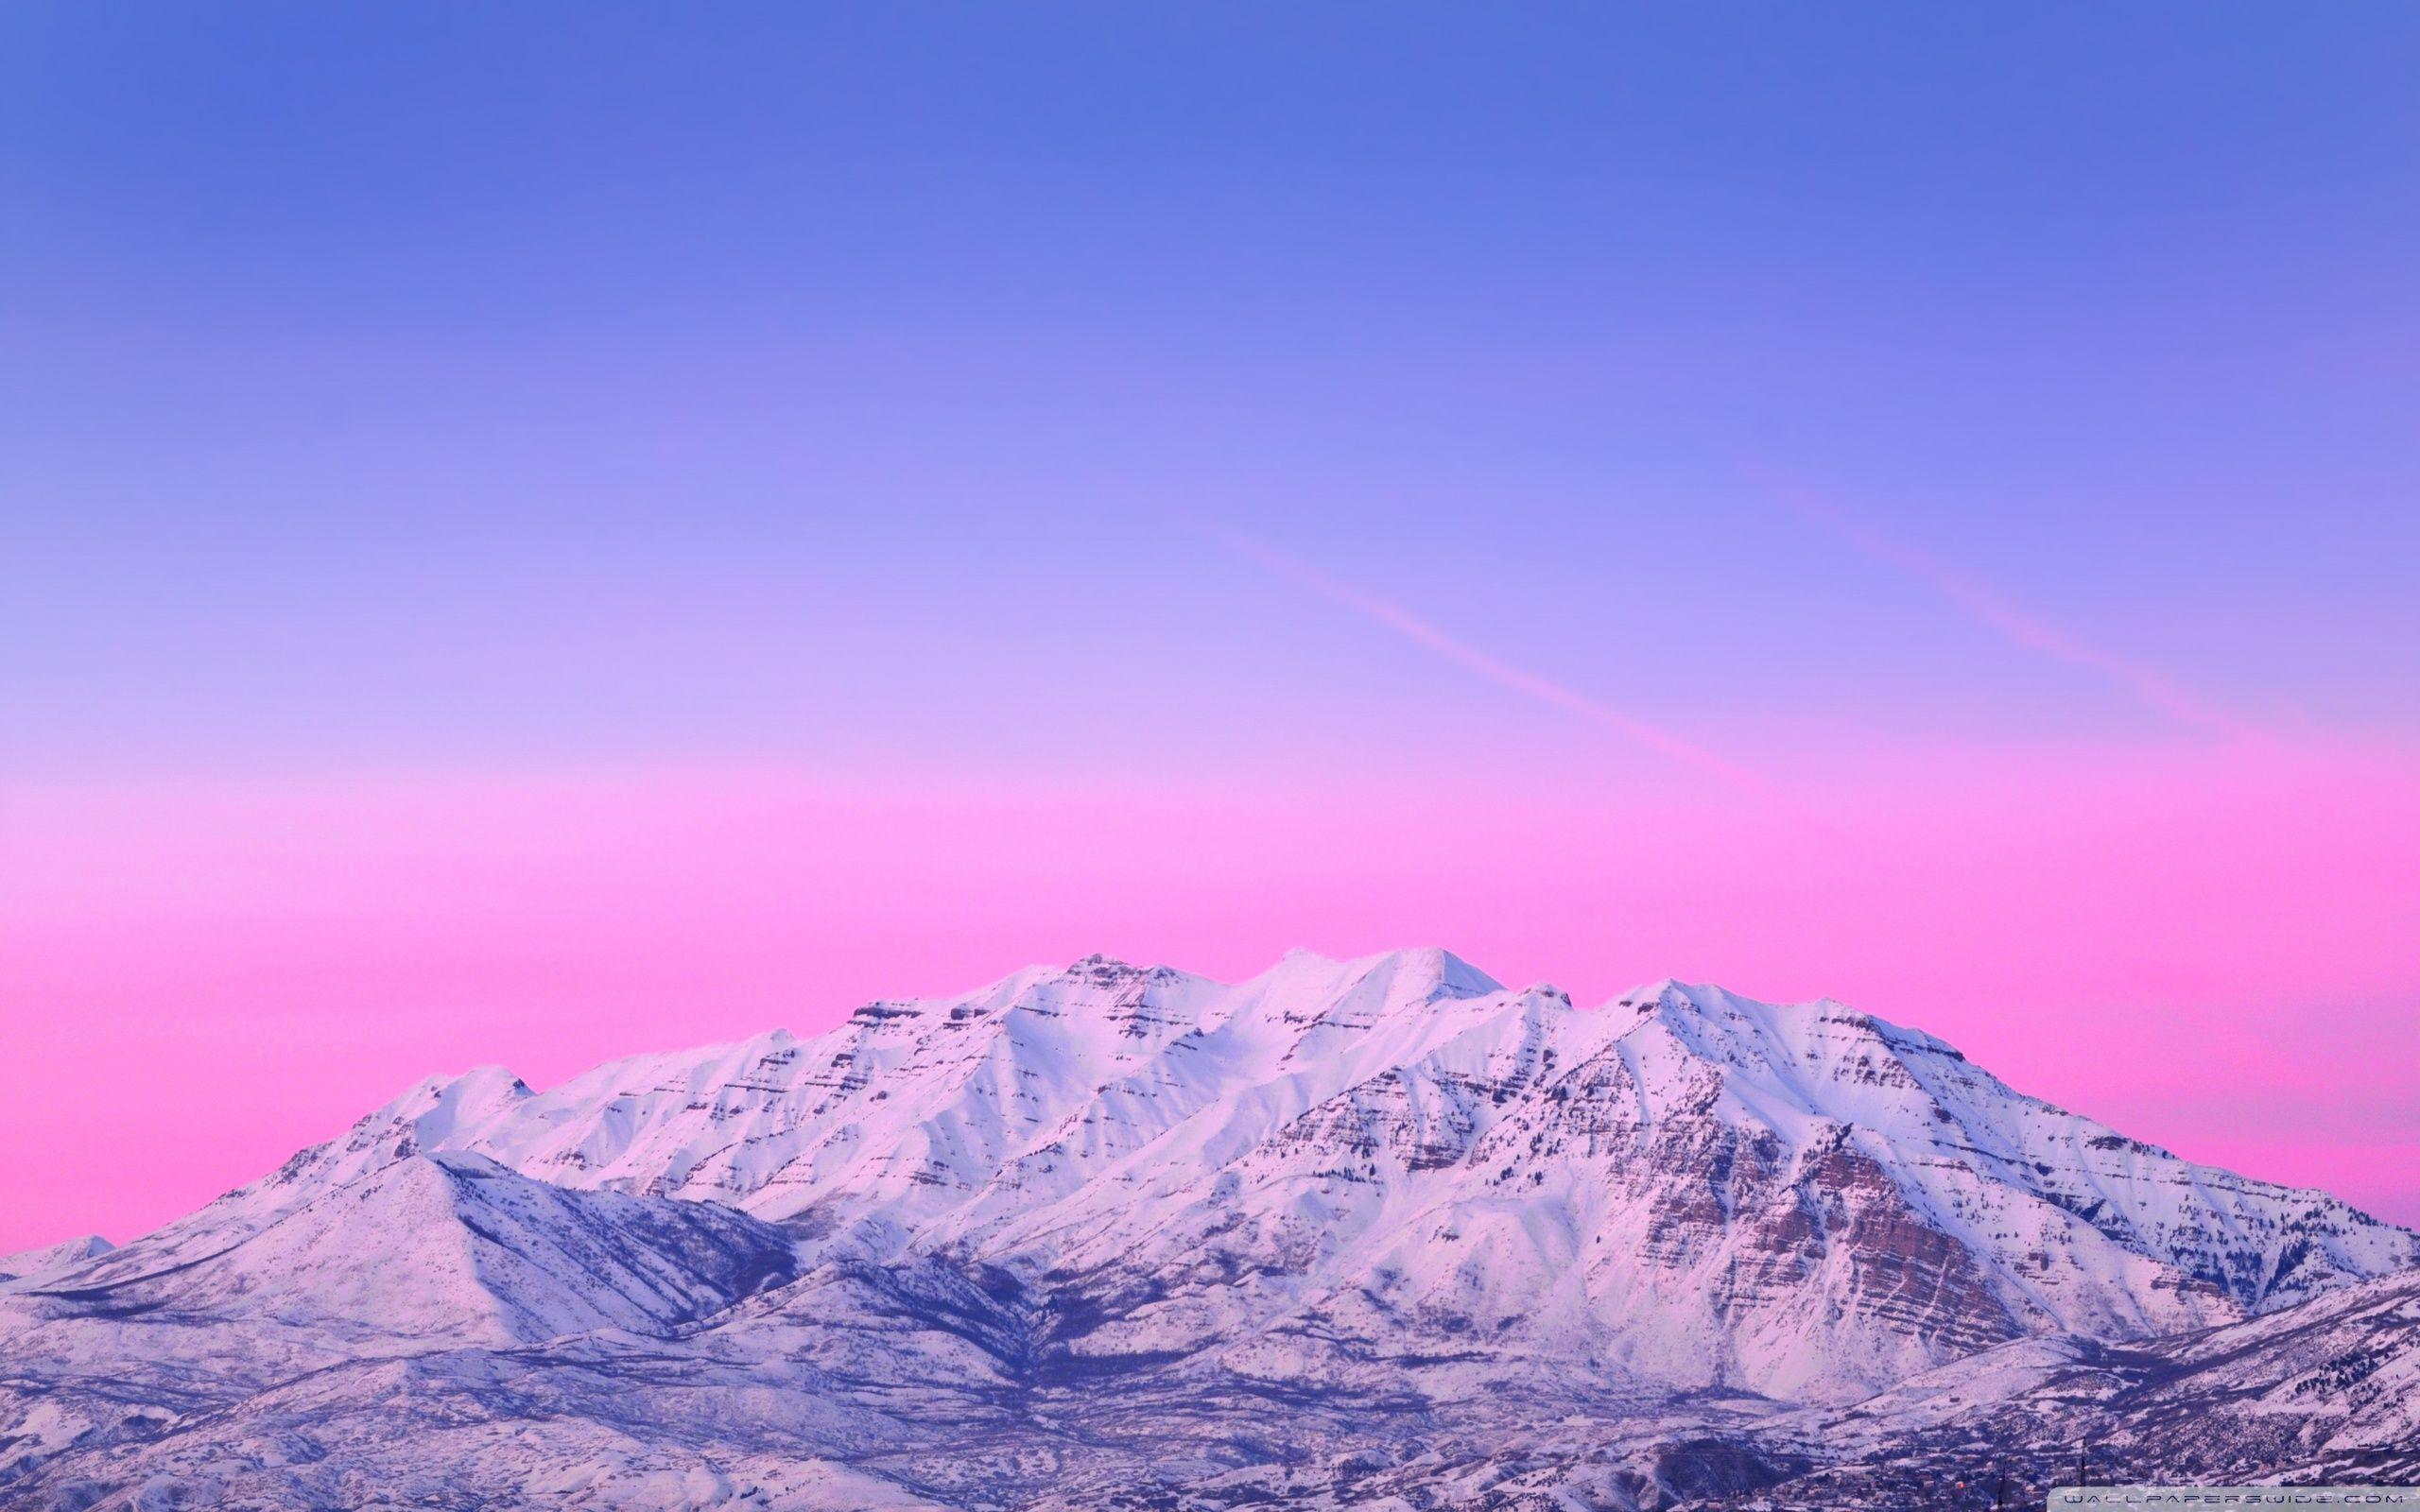 Pastel Aesthetic Mountain Wallpapers - Top Free Pastel ...